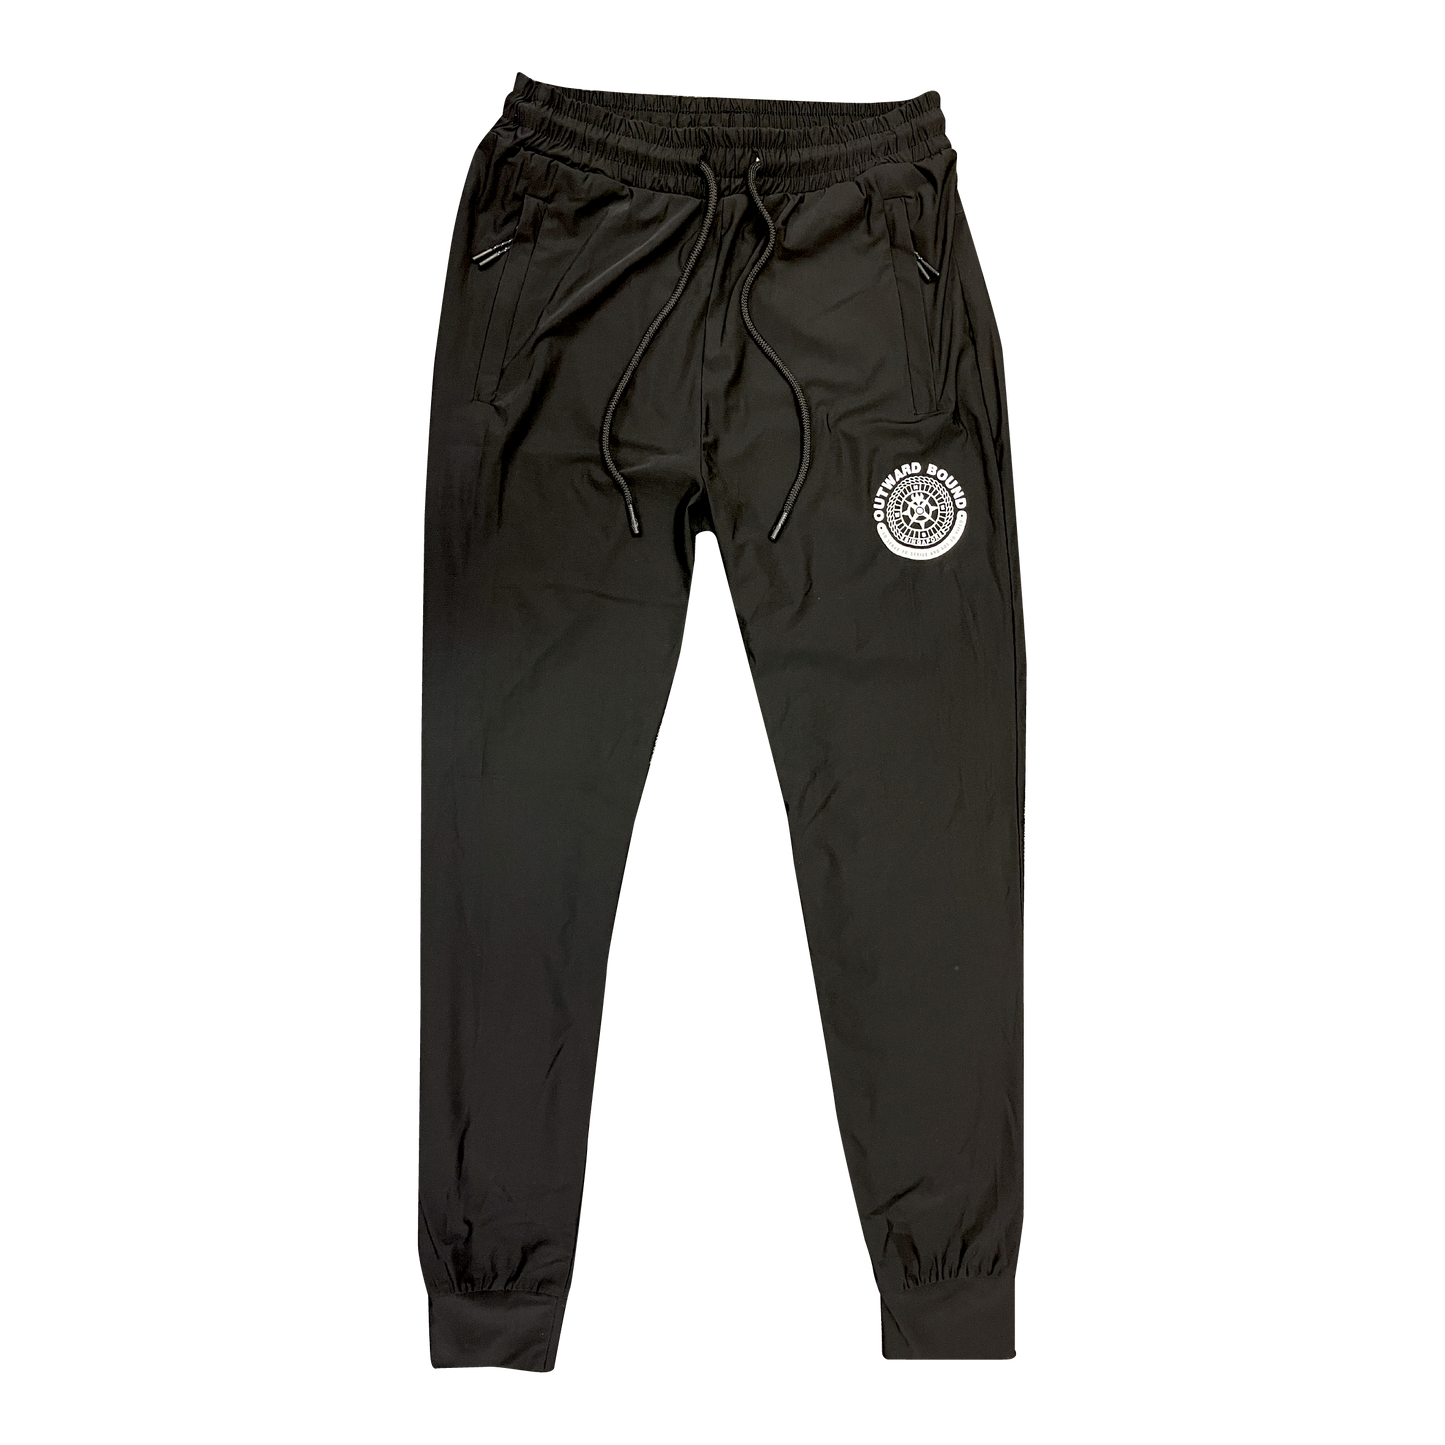 OBS Starter Kit: Basic Jogger Pants (Black) + Basic Tee (Royal Blue ...